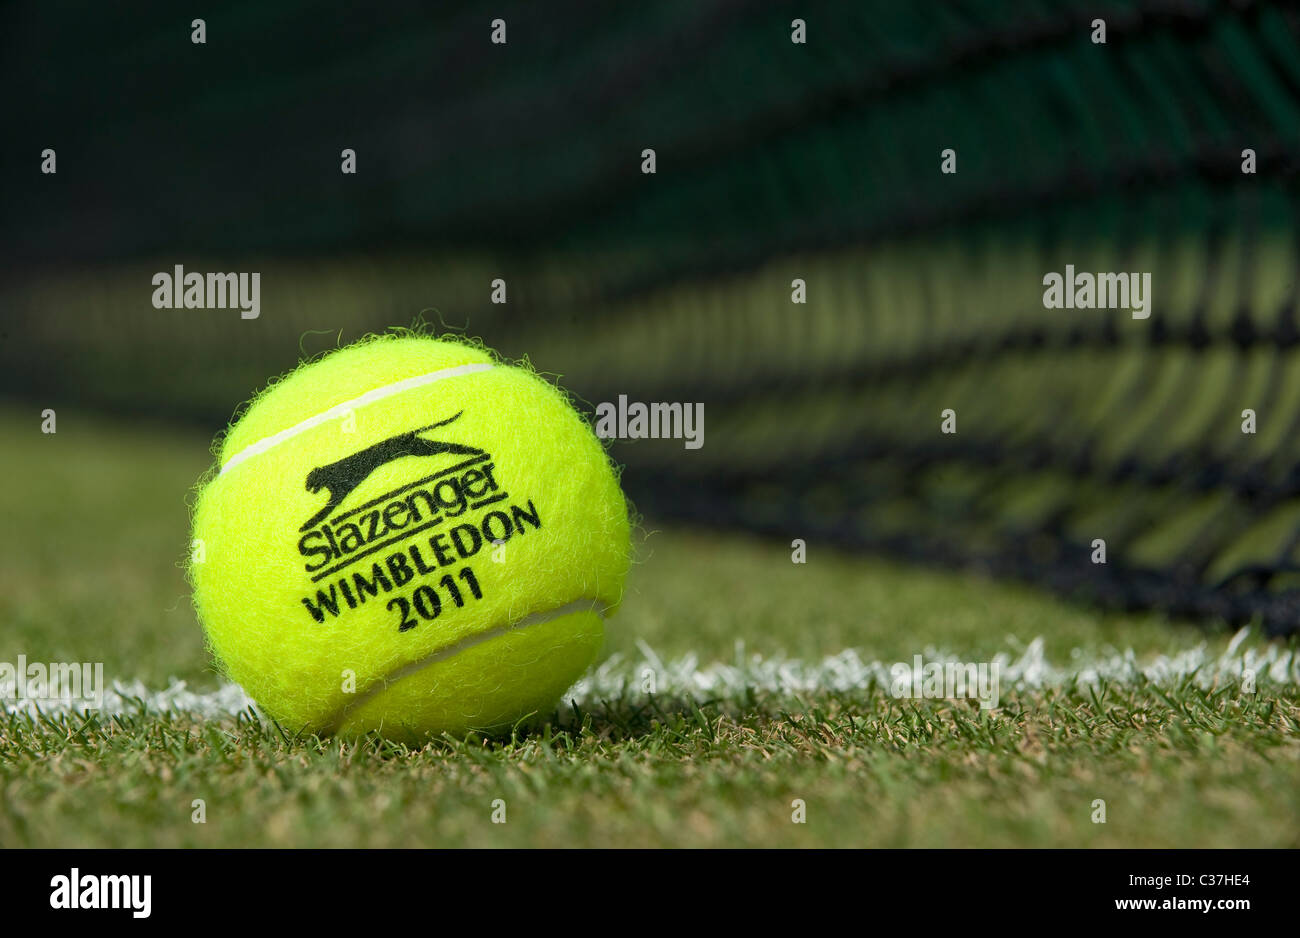 Slazenger tennisball -Fotos und -Bildmaterial in hoher Auflösung – Alamy